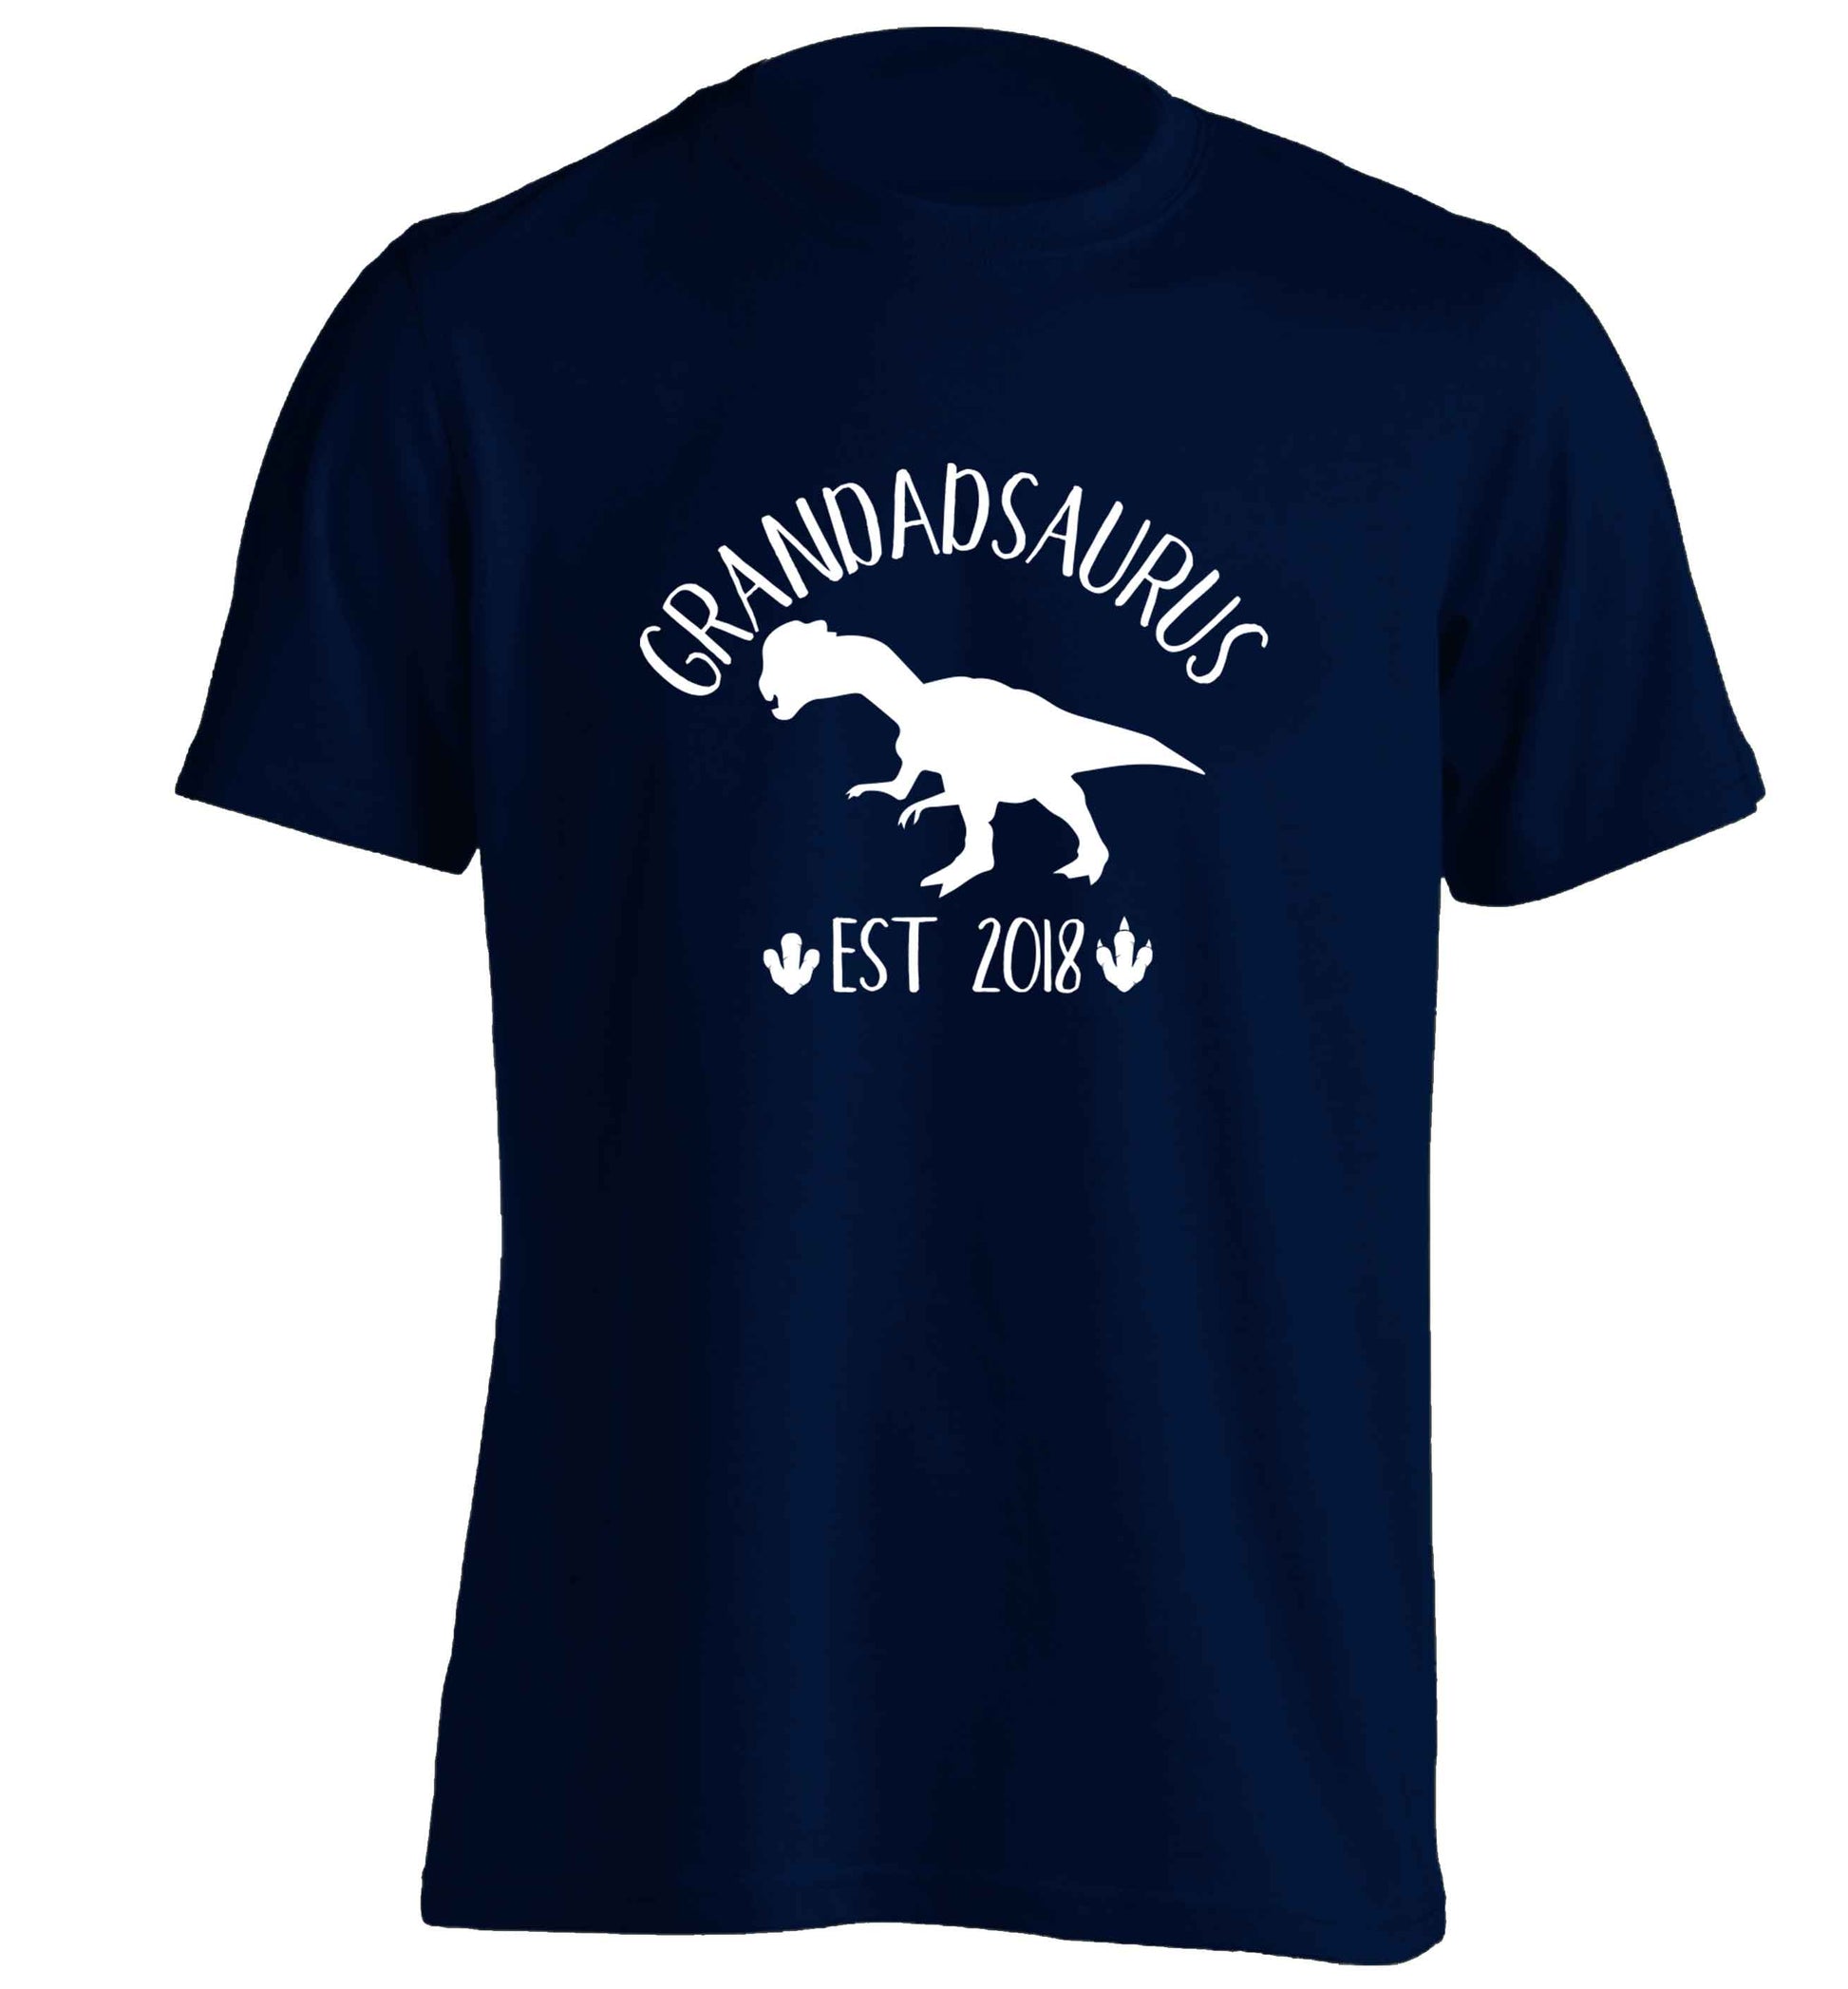 Personalised grandadsaurus since (custom date) adults unisex navy Tshirt 2XL